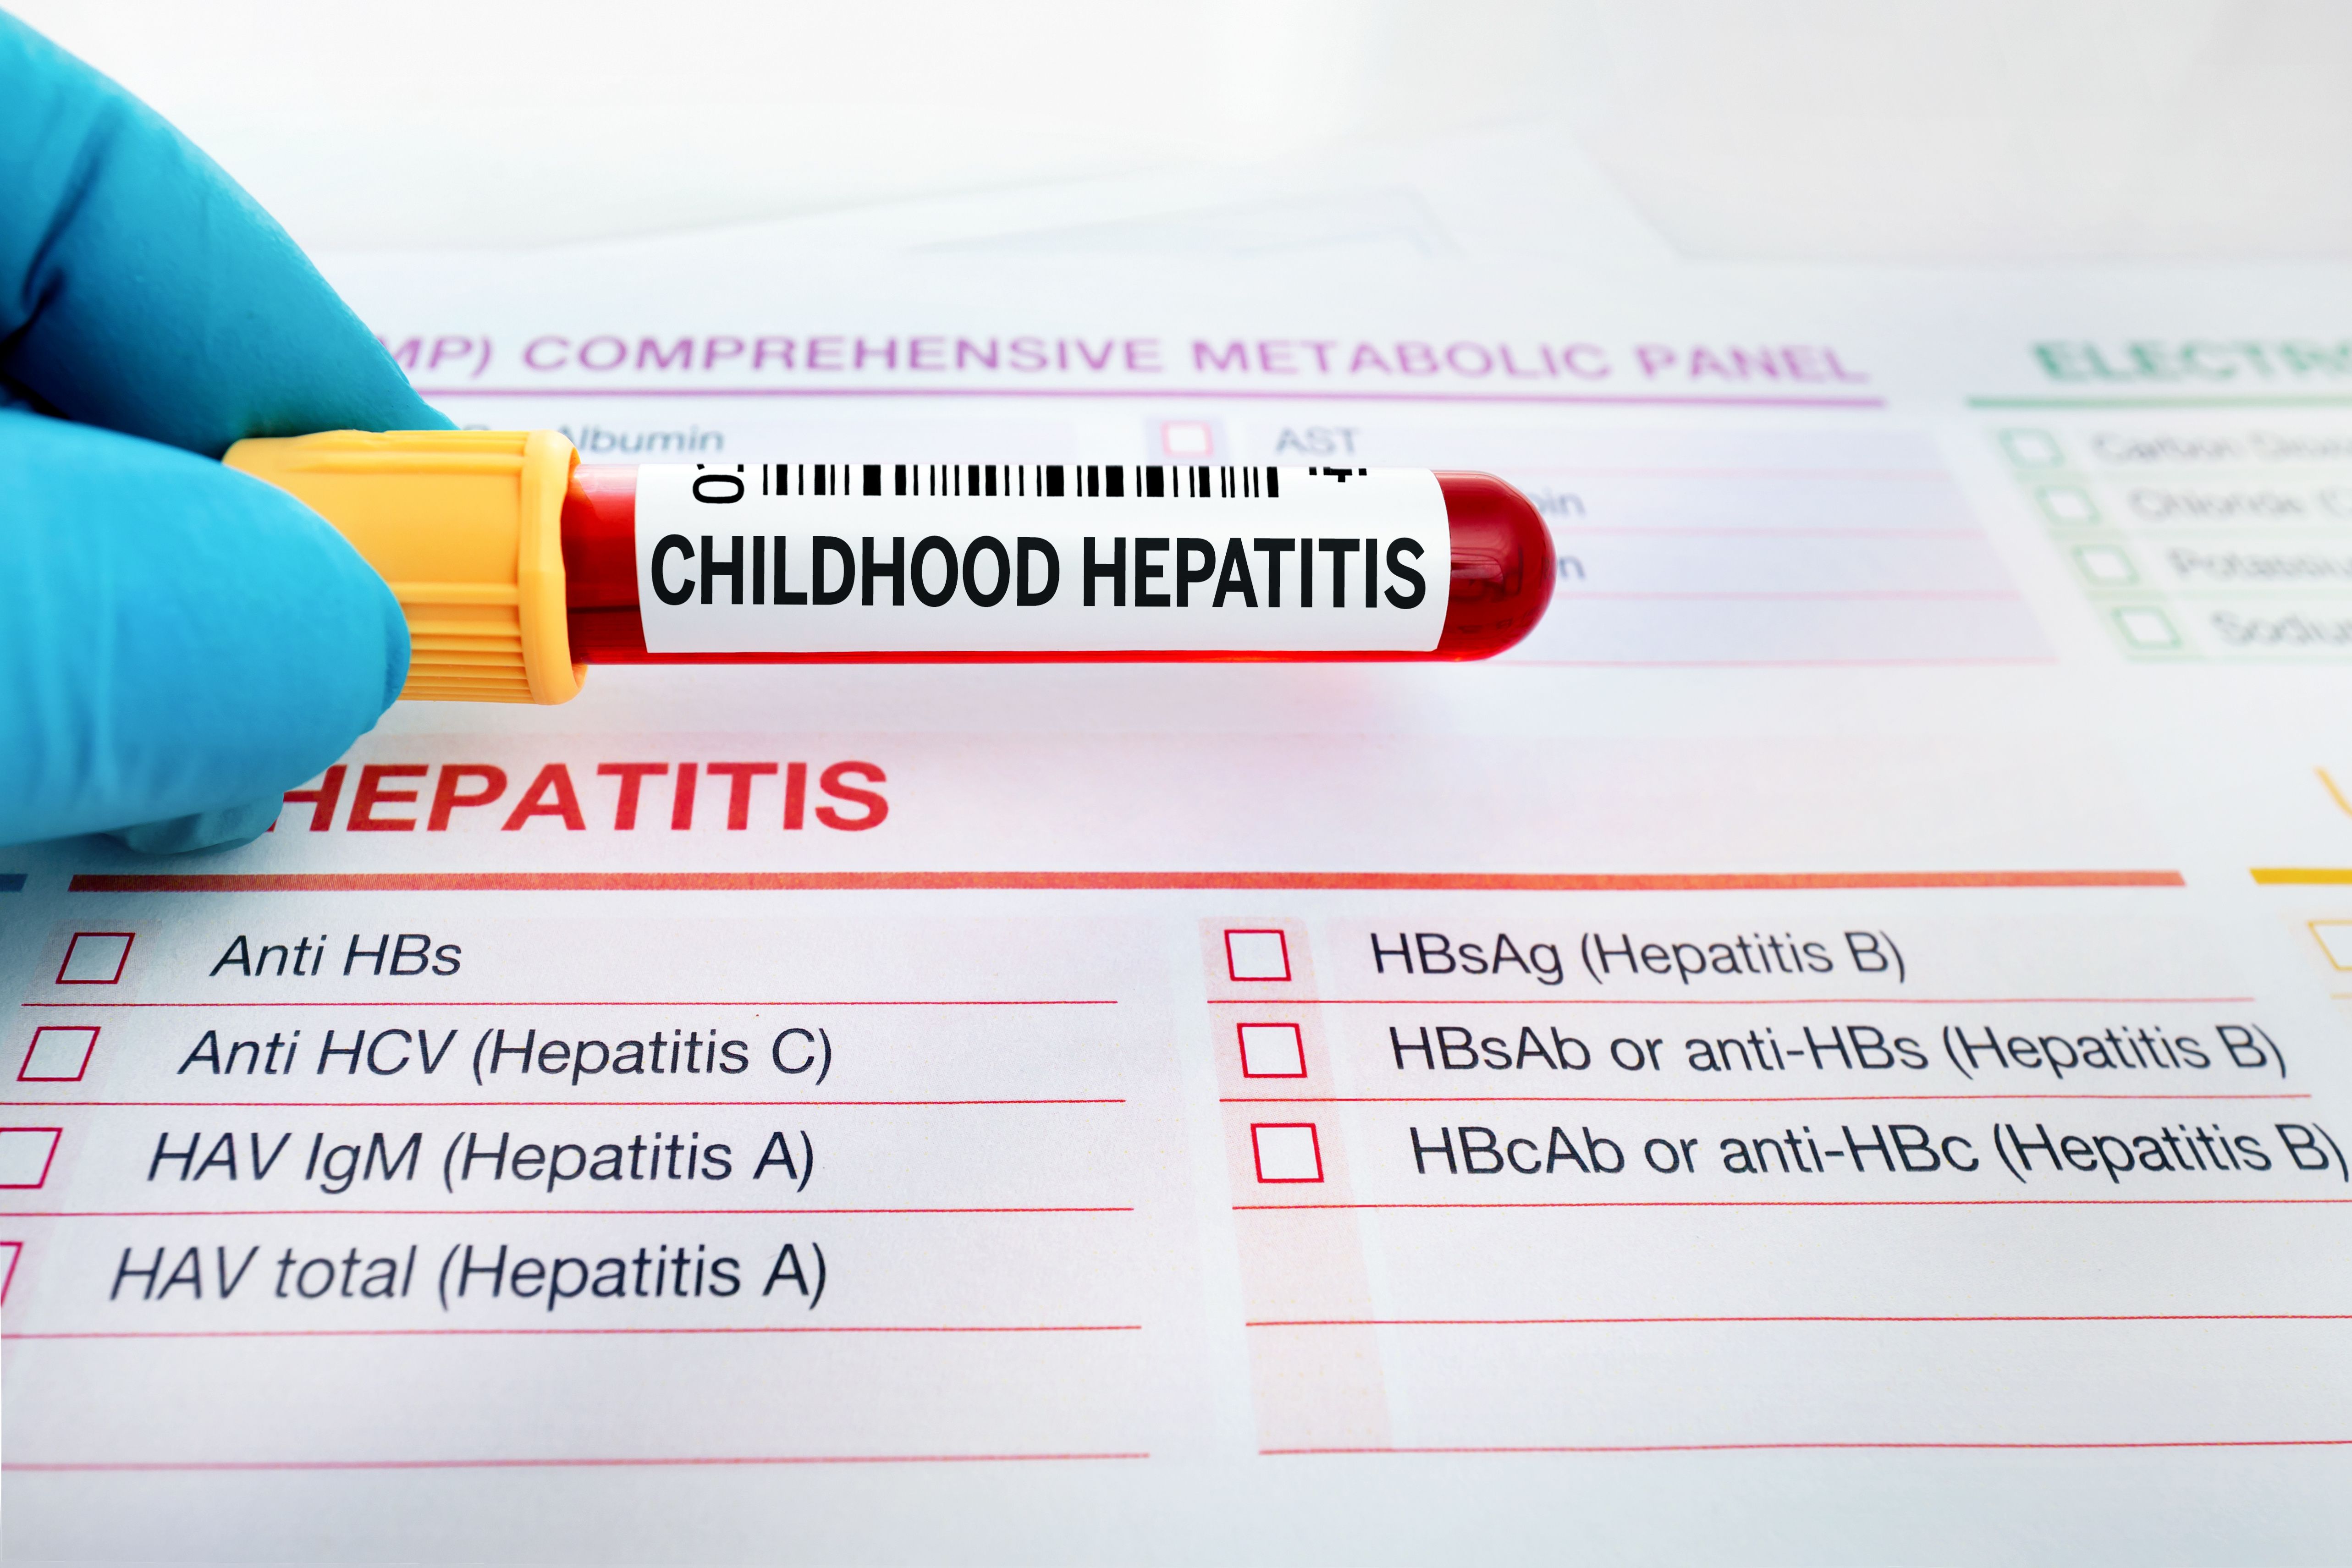 Adenovirus was determined to have caused most cases of hepatitis of unknown origin in children.